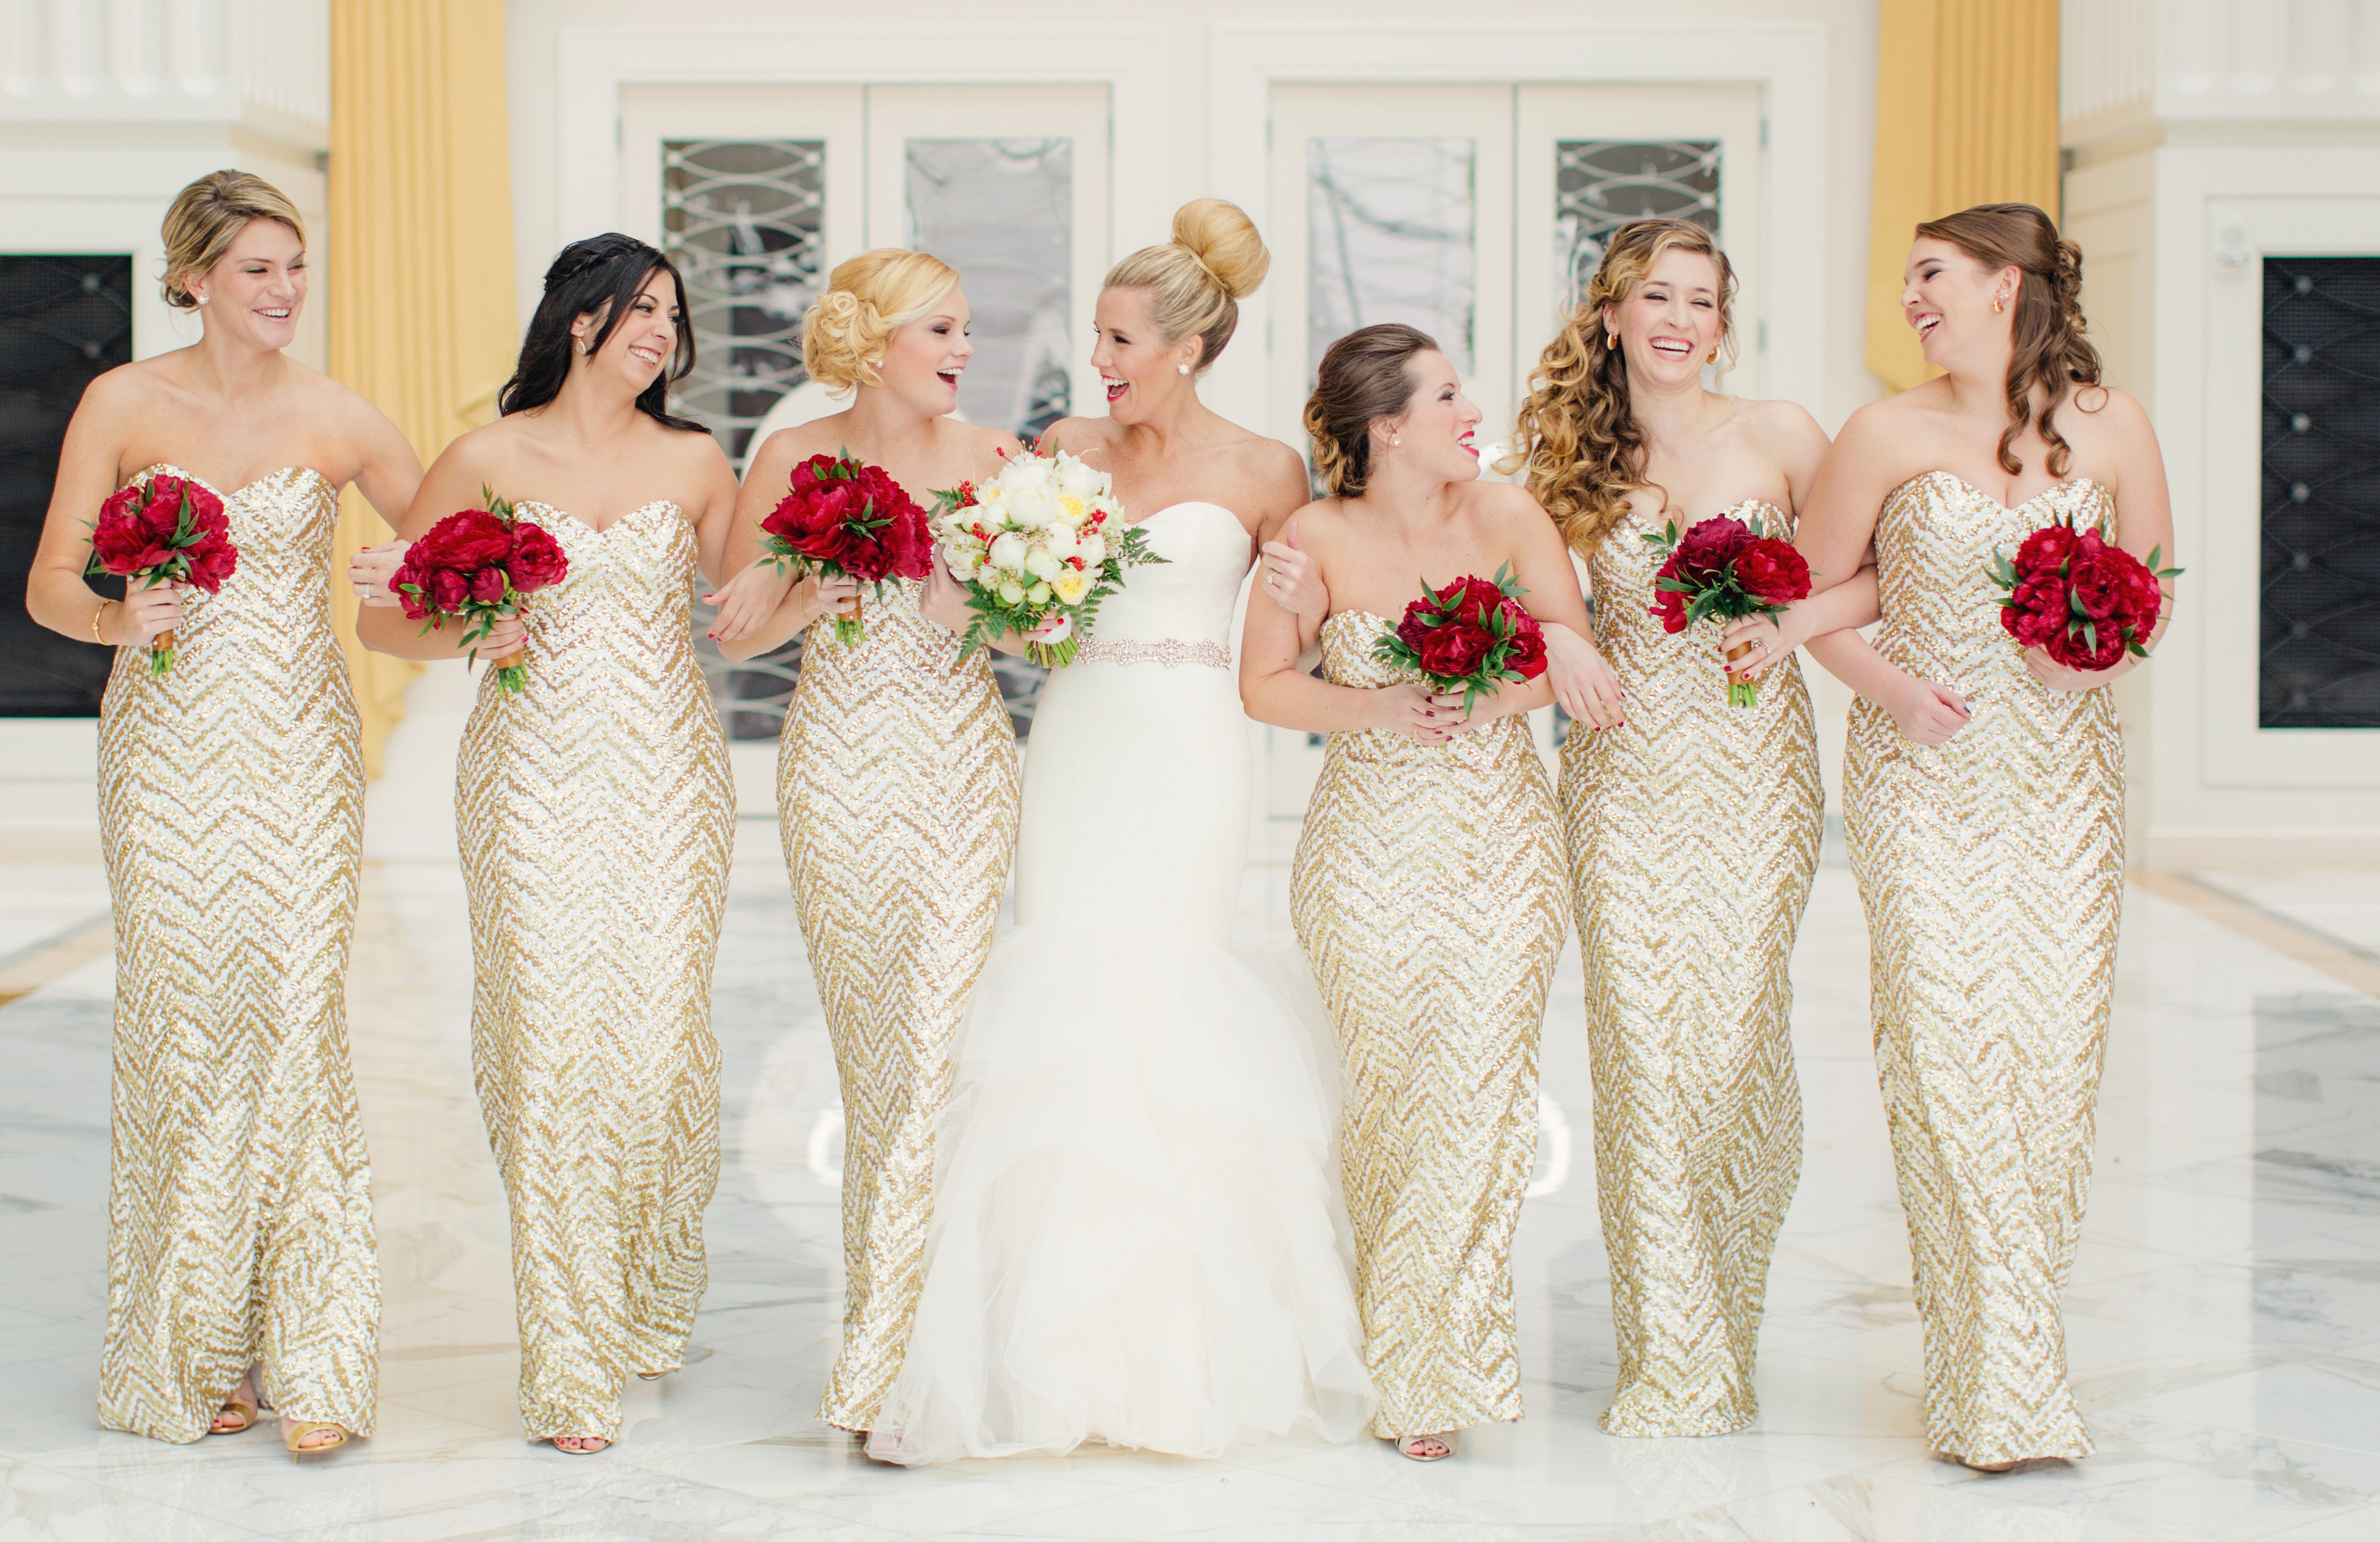 Simply Breathe Events BlogWinter Wedding Inspiration: 'Tis the Season! | DC Wedding Planner ...